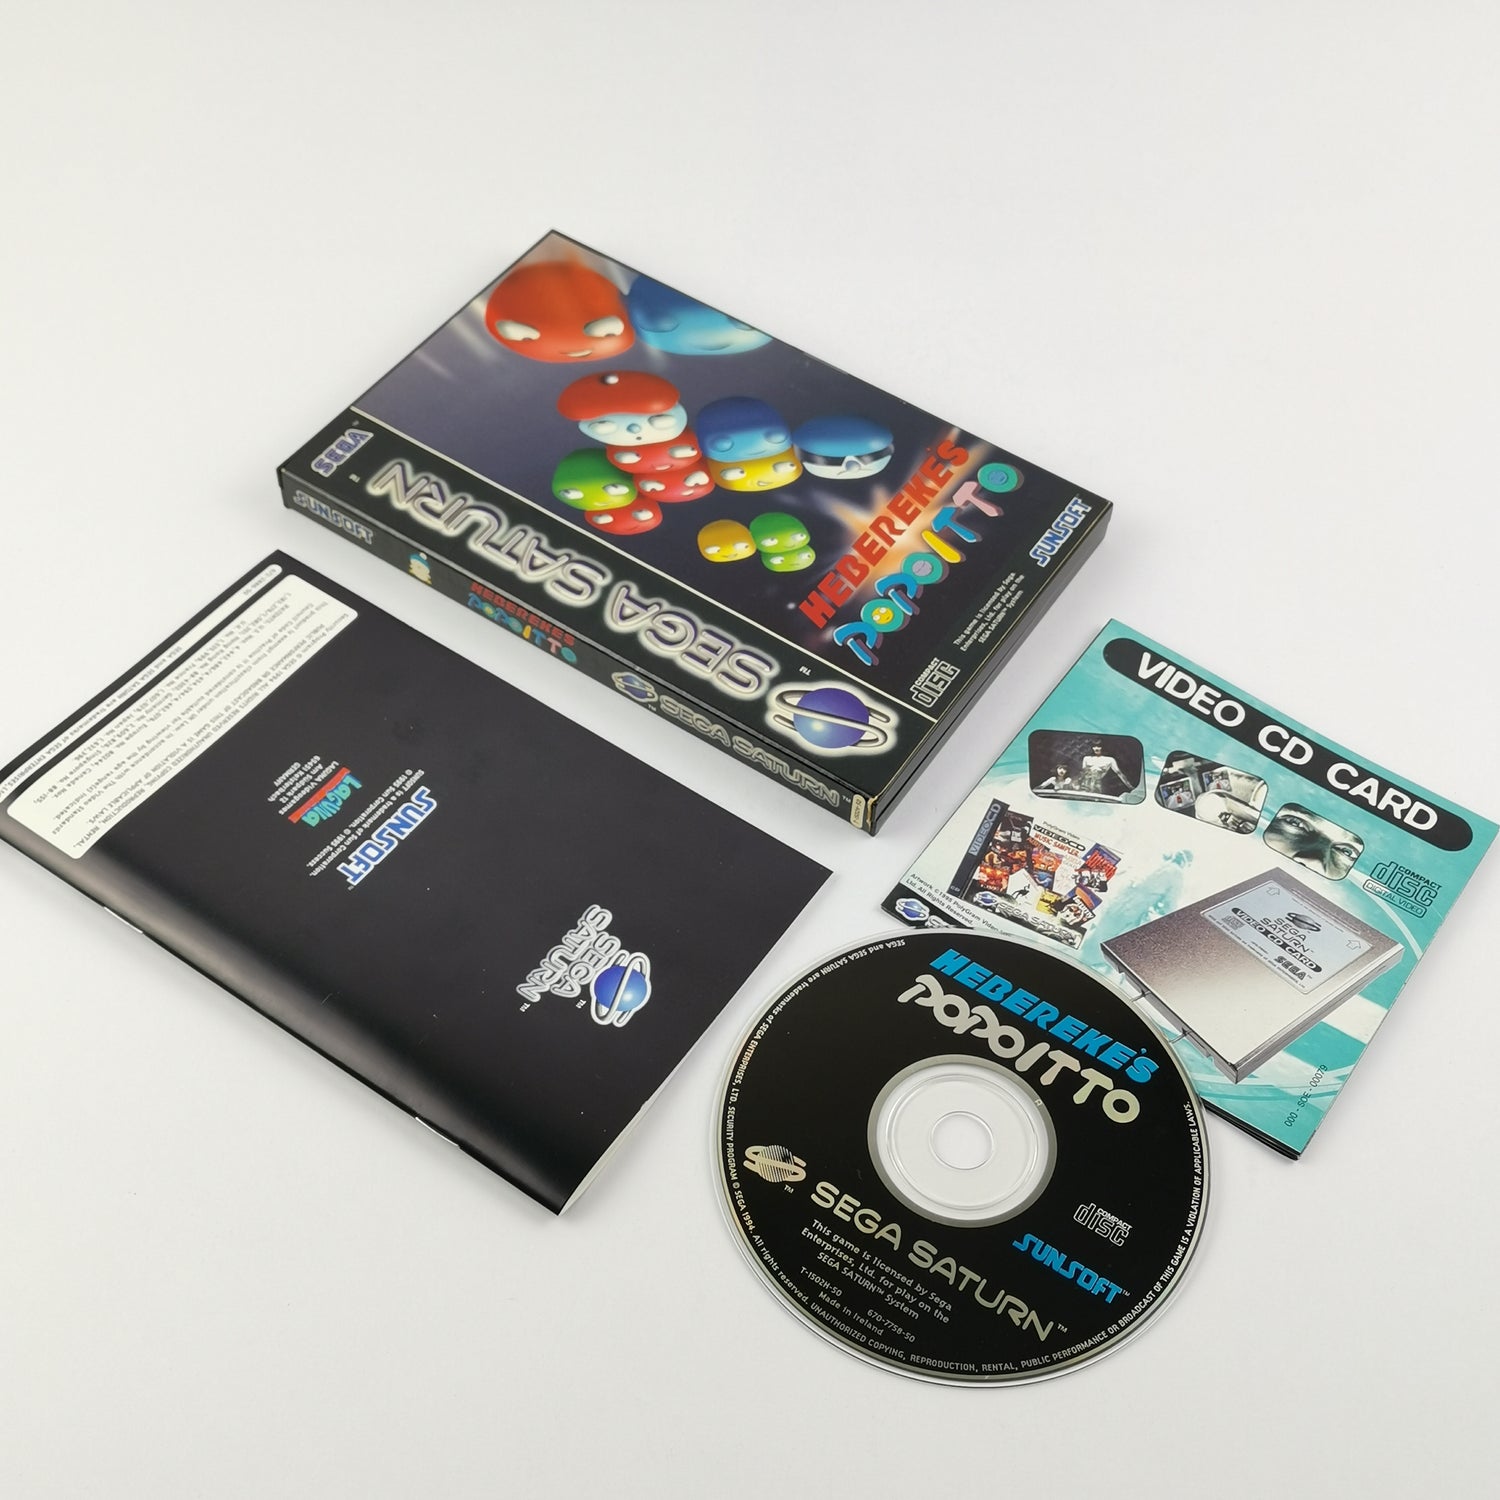 Sega Saturn Game: Hebereke's Popoitto - OVP Instructions PAL | SS Disc Sunsoft